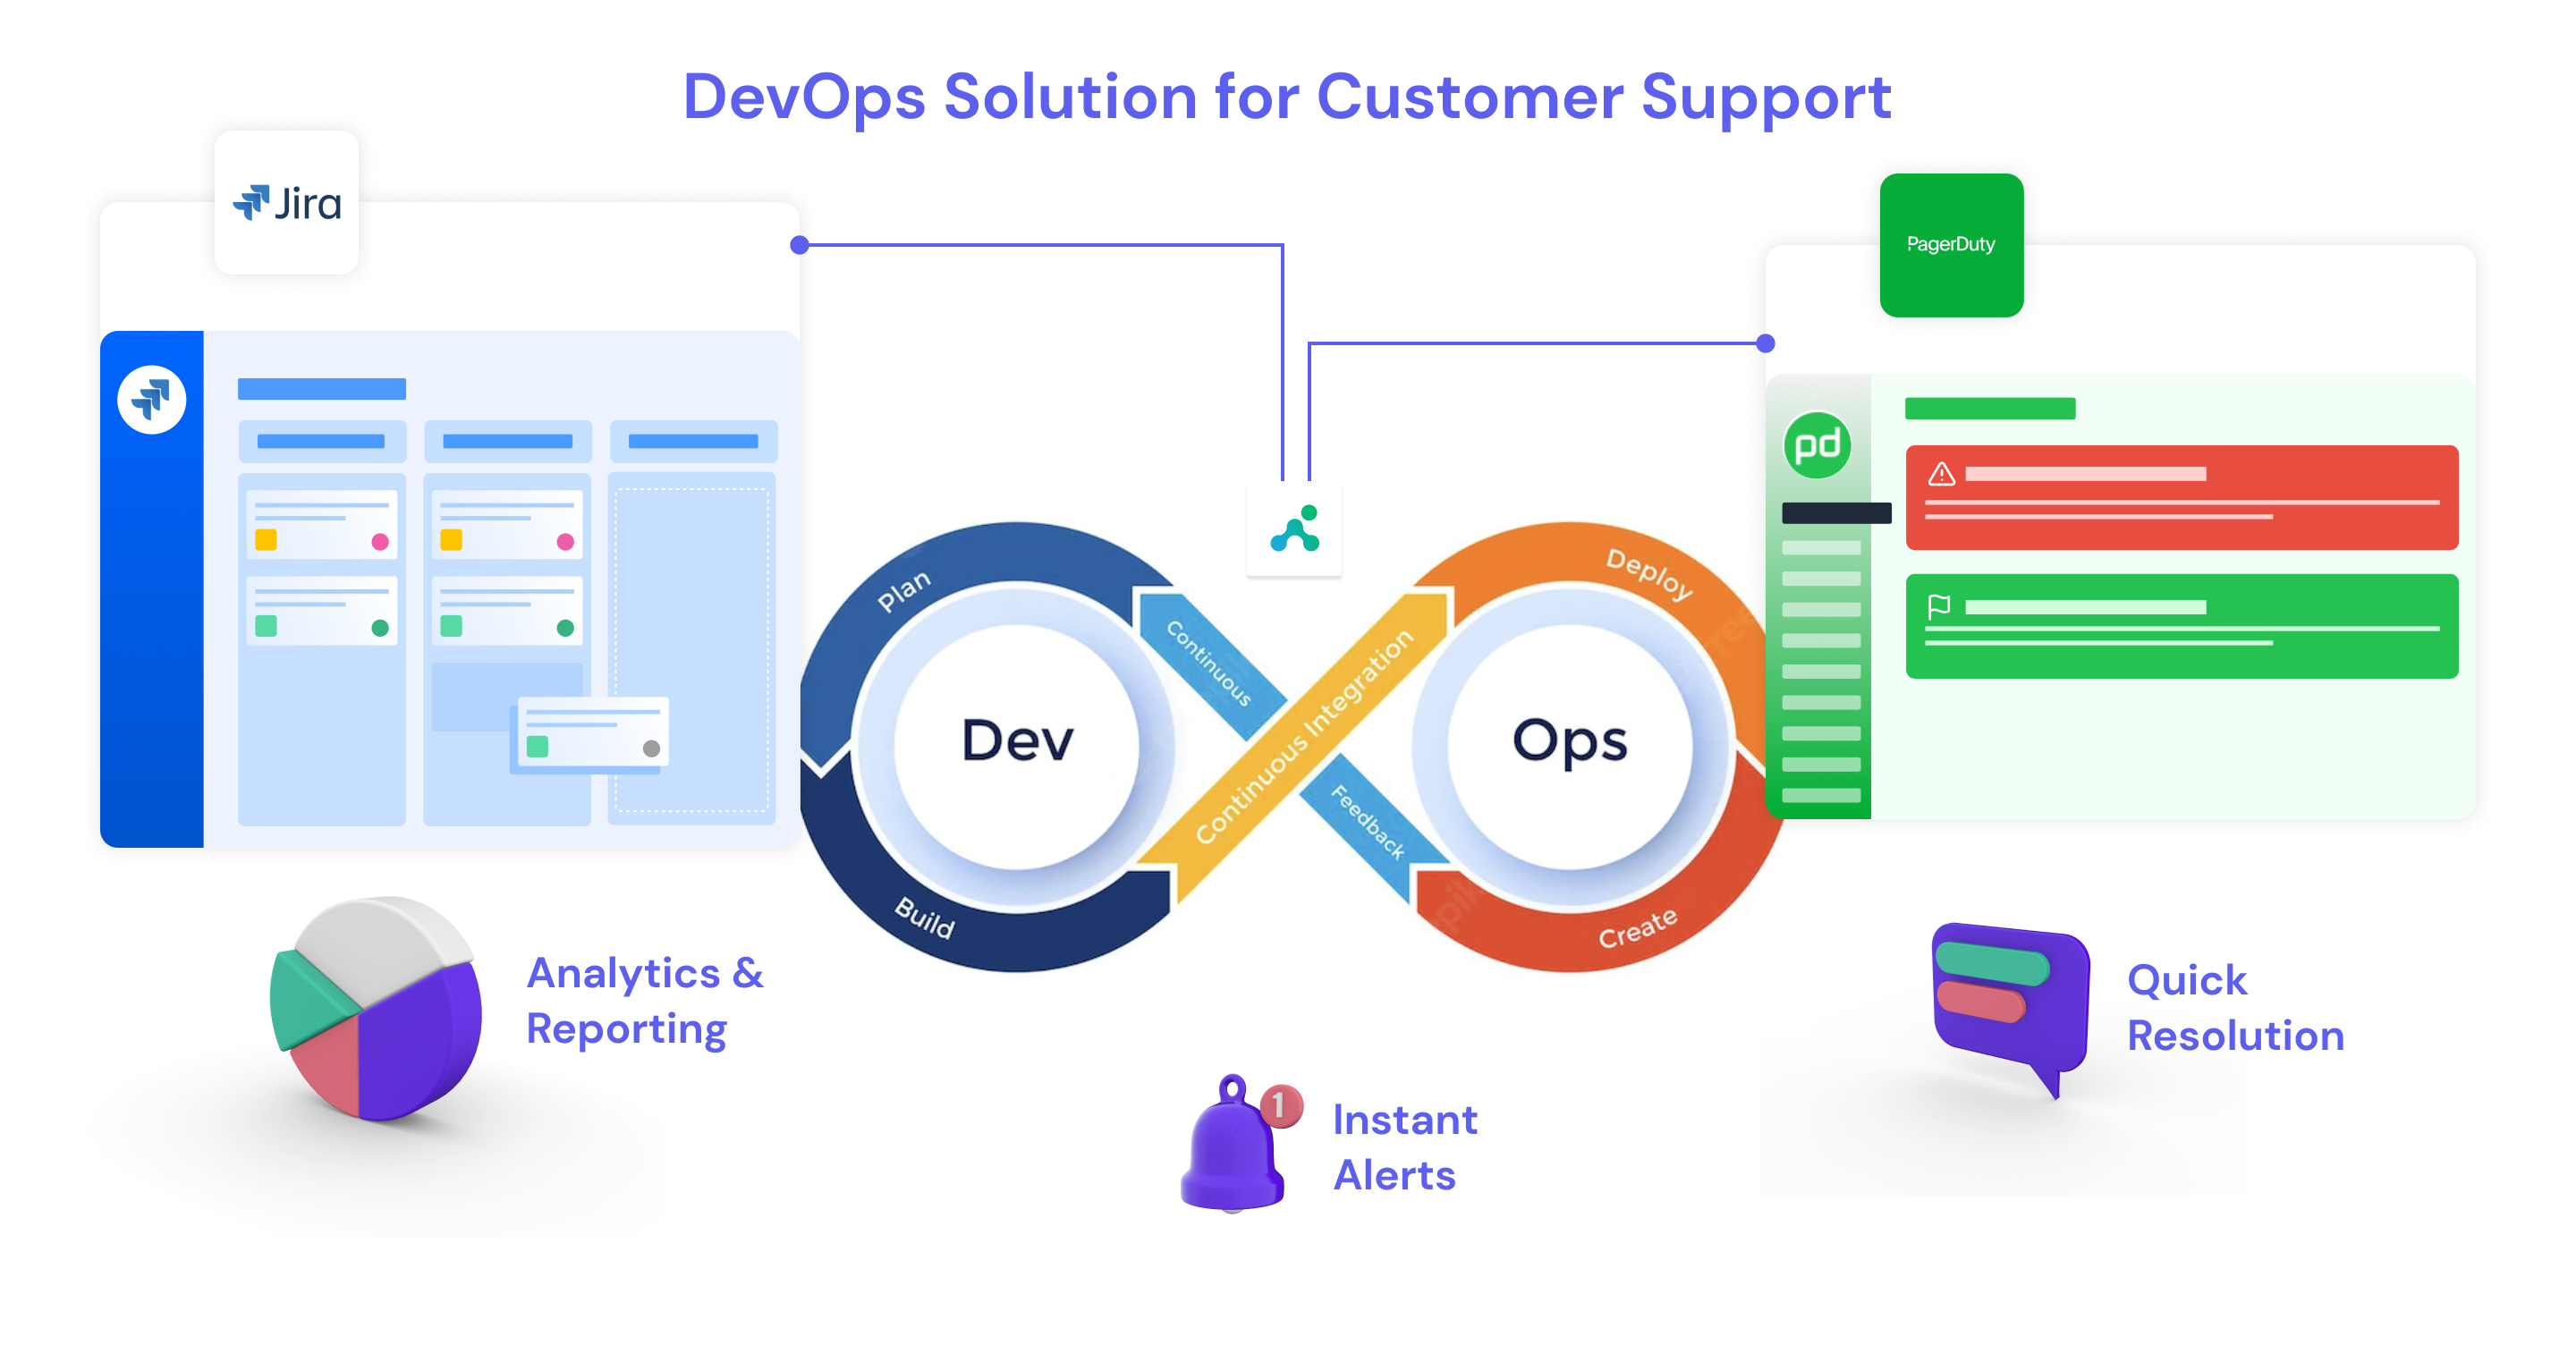 DevOps solution for Customer Support